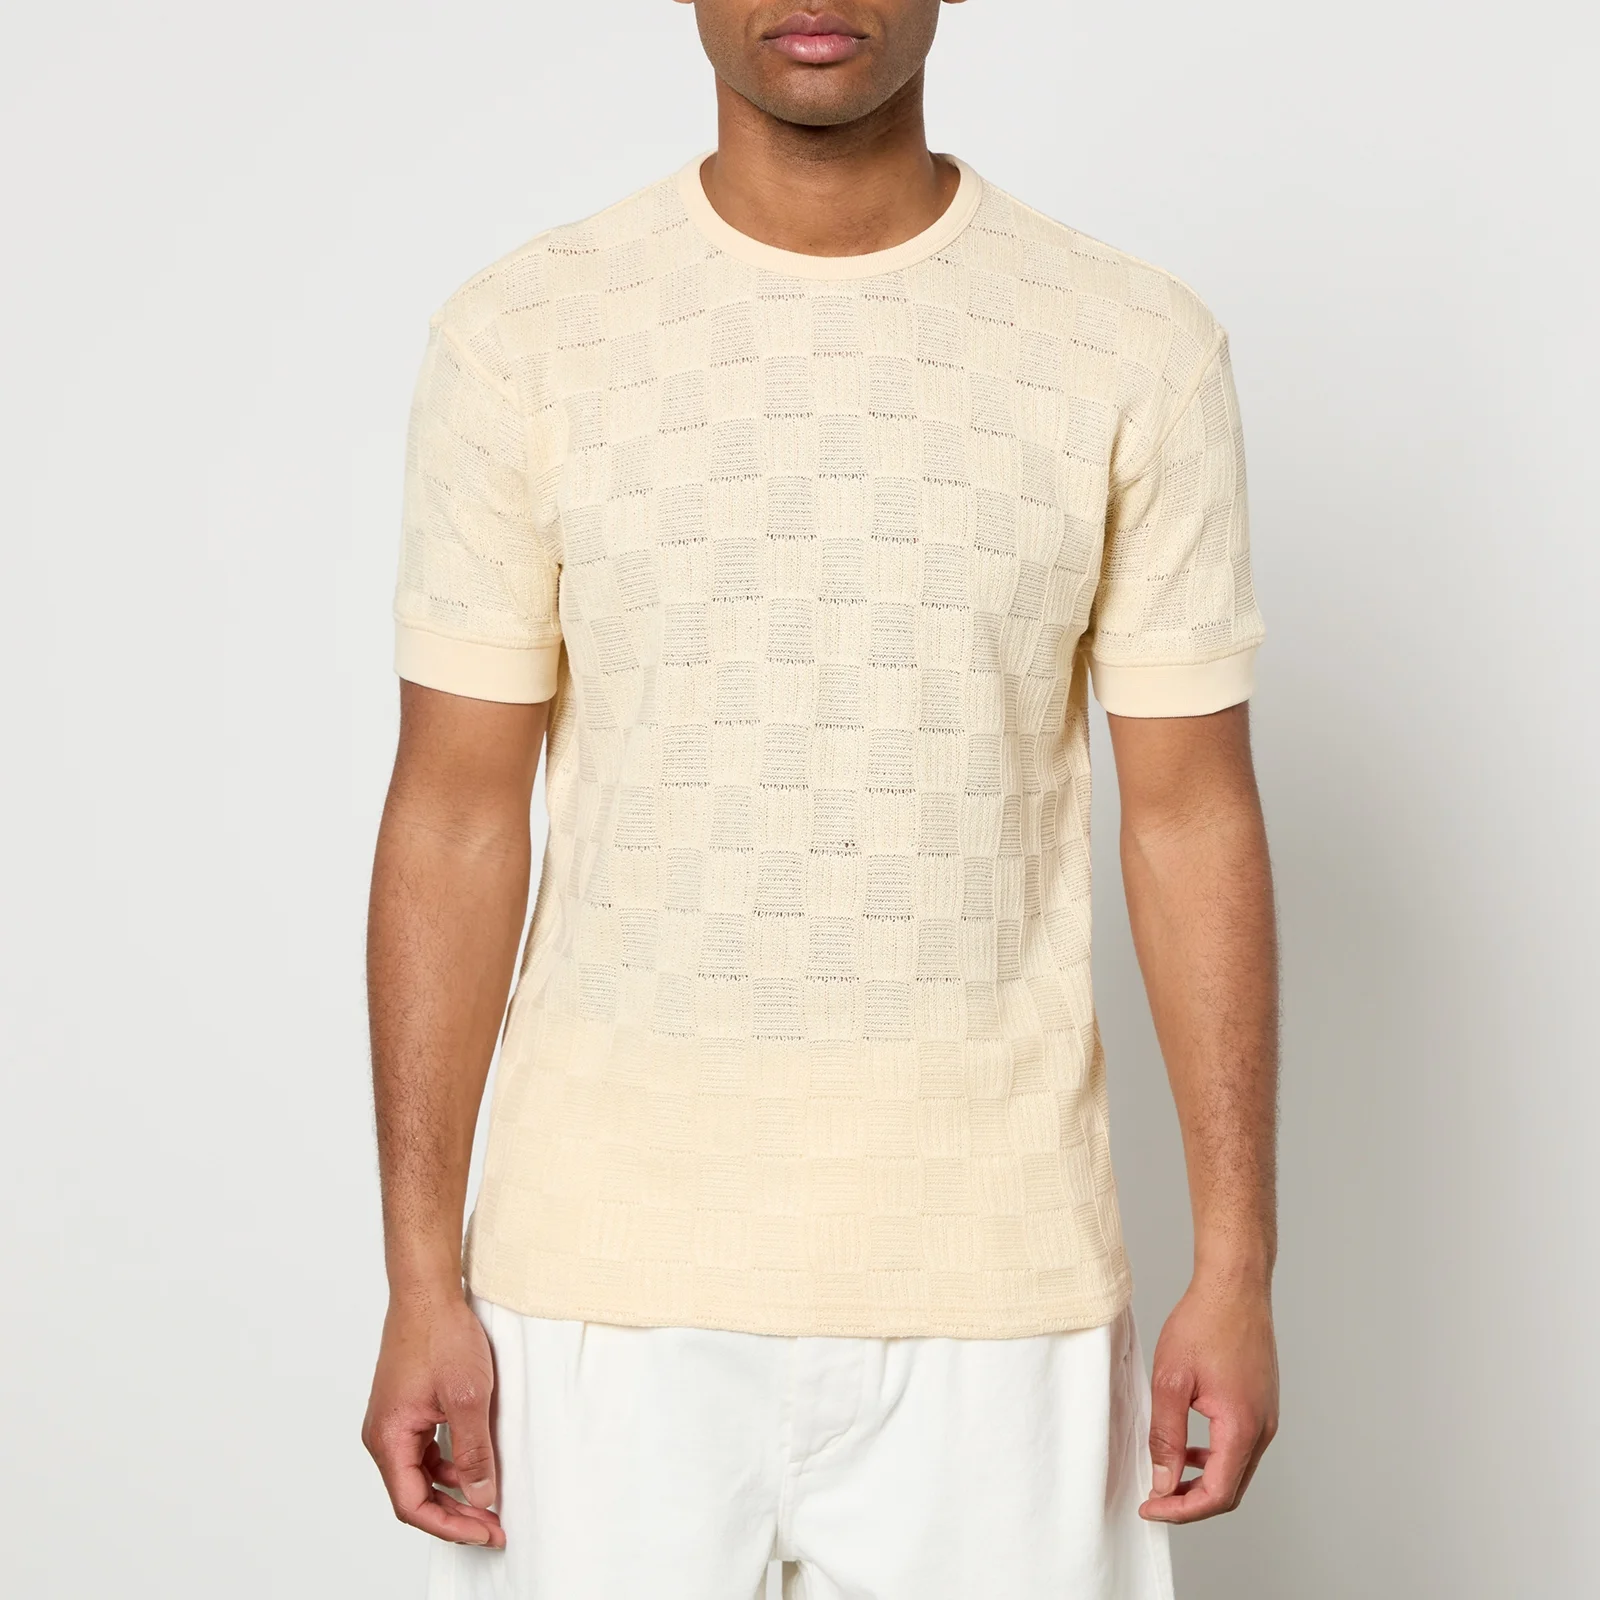 Sunflower Gym Checked Linen-Blend Jacquard T-Shirt Image 1